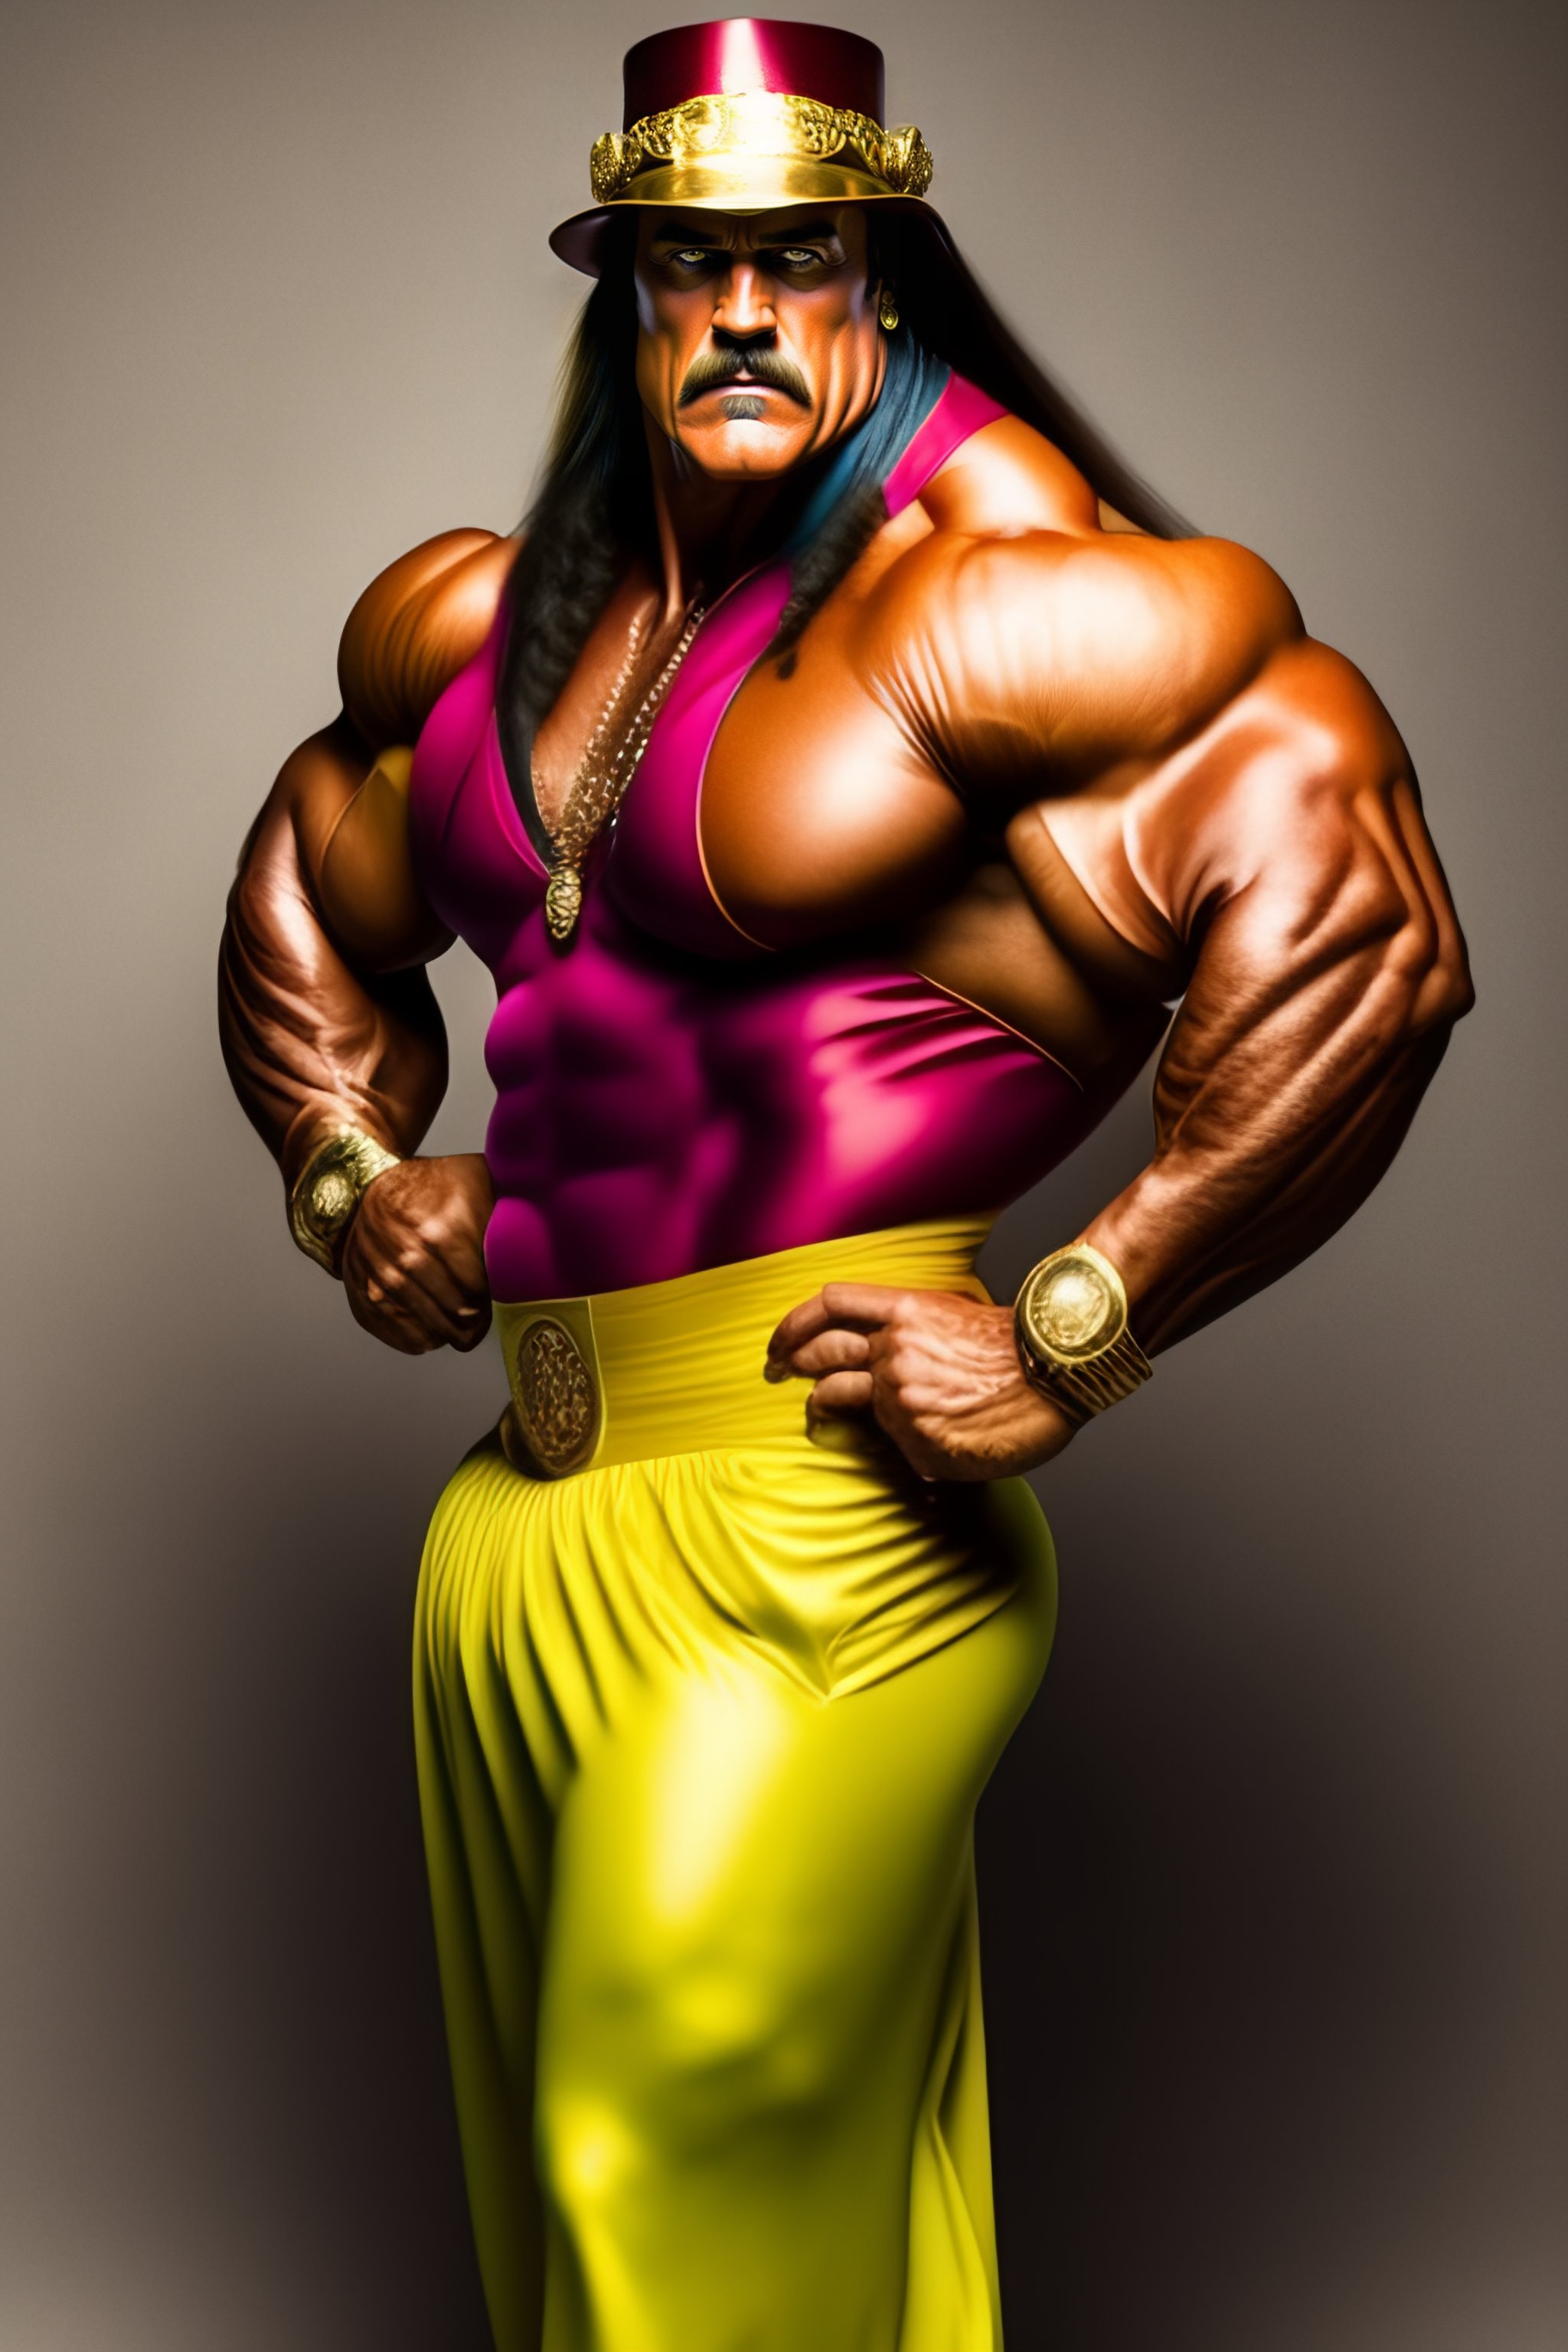 Lexica - Hulk Hogan in a dress